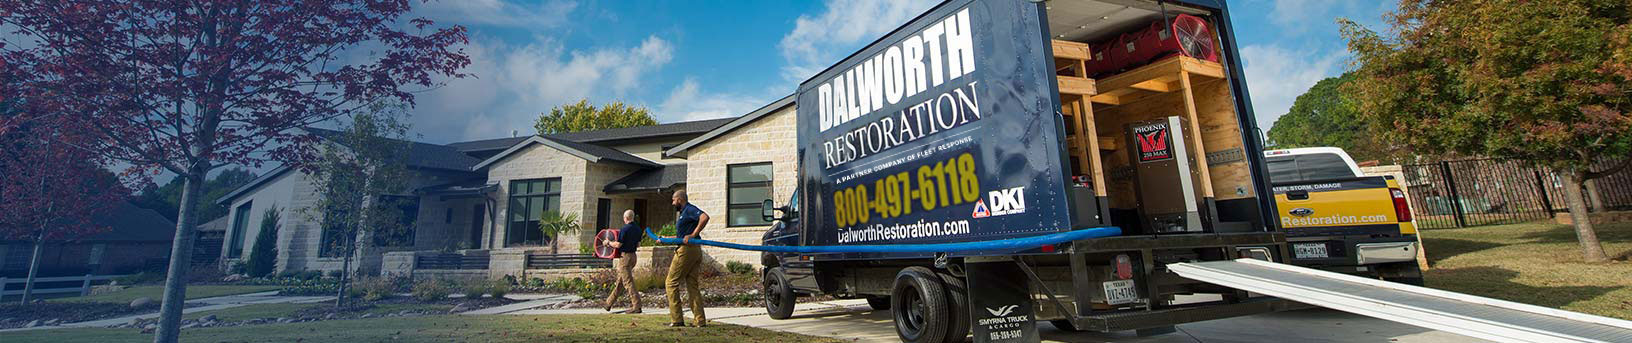 Dalworth Restoration Waco